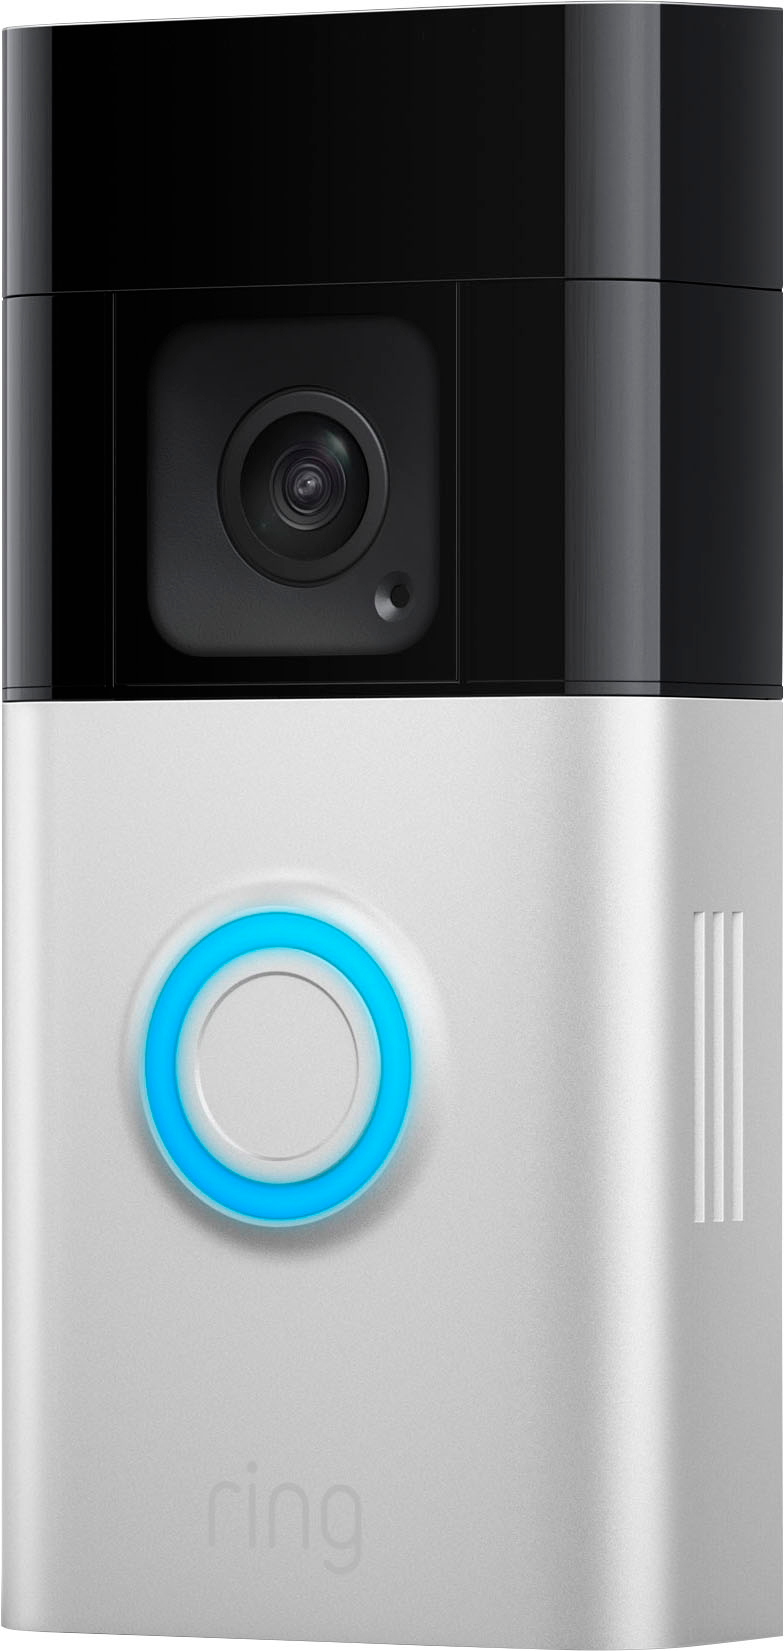 Video Doorbell - Smart Wireless WiFi Doorbell Camera with Built-in Battery,  2-Way Talk, Night Vision, Satin Nickel